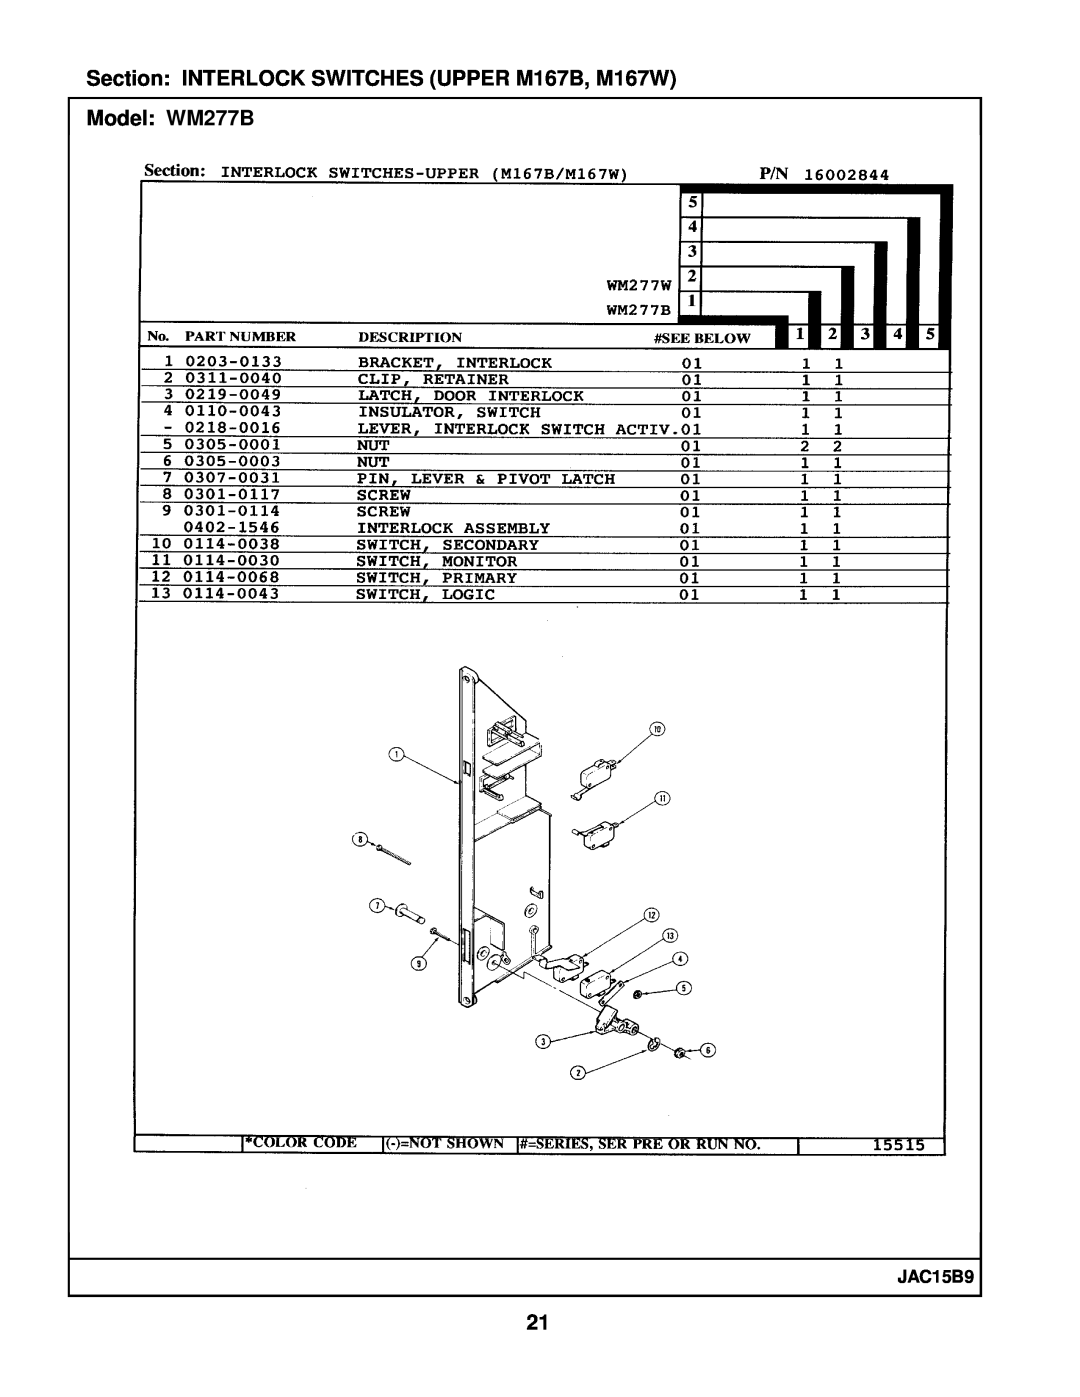 Maytag manual Section INTERLOCK SWITCHES UPPER M167B, M167W, JAC15B9, Model WM277B 